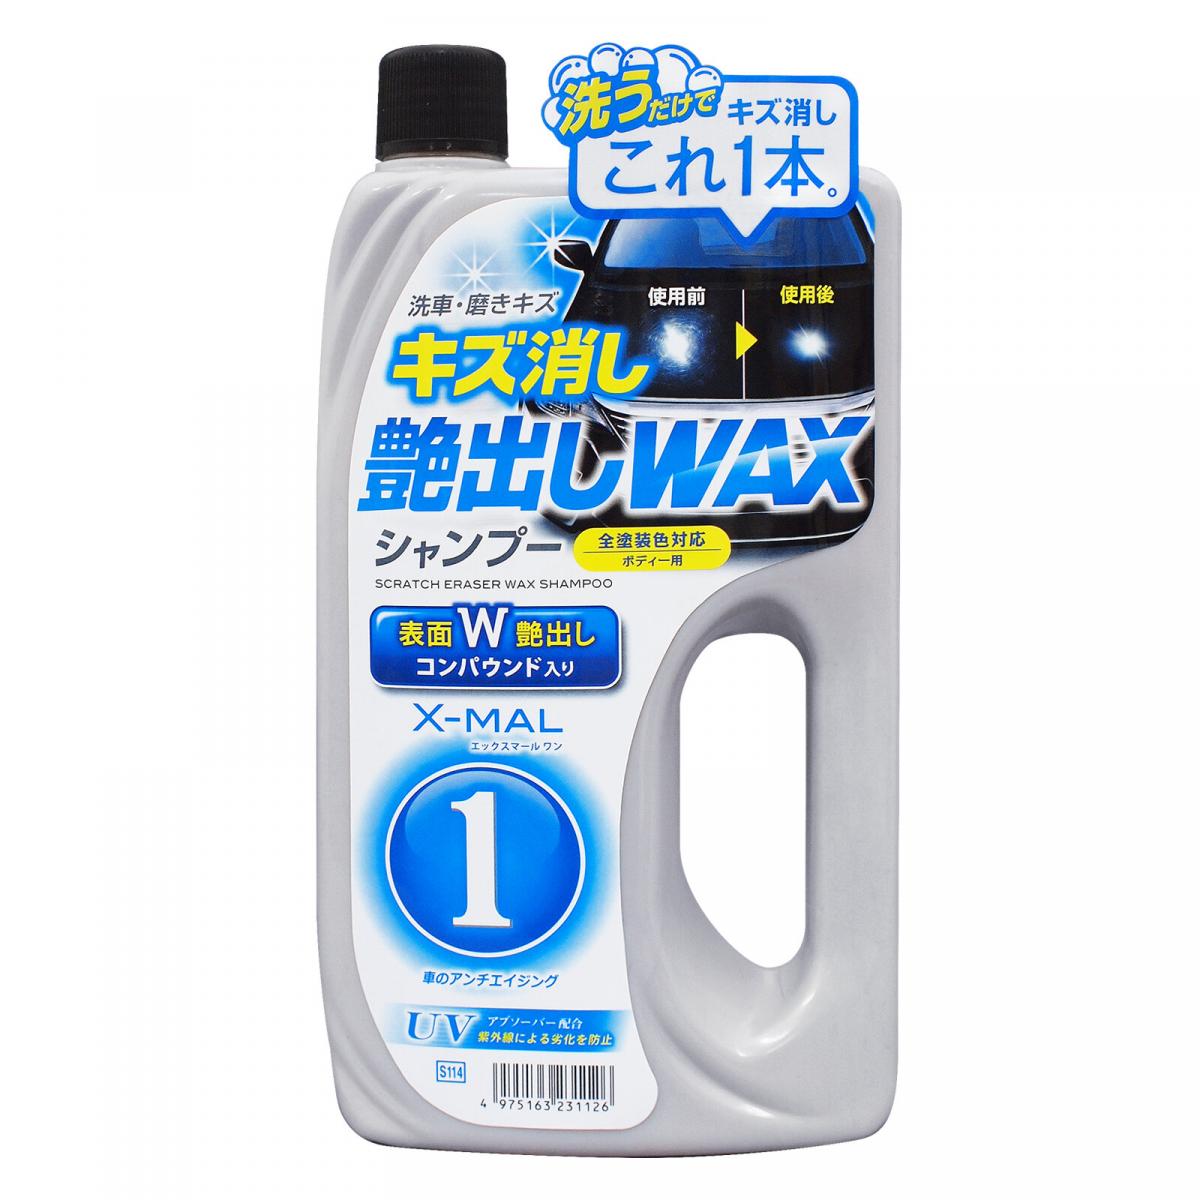 Scratch Eraser & Wax Shampoo "X-MAL 1"